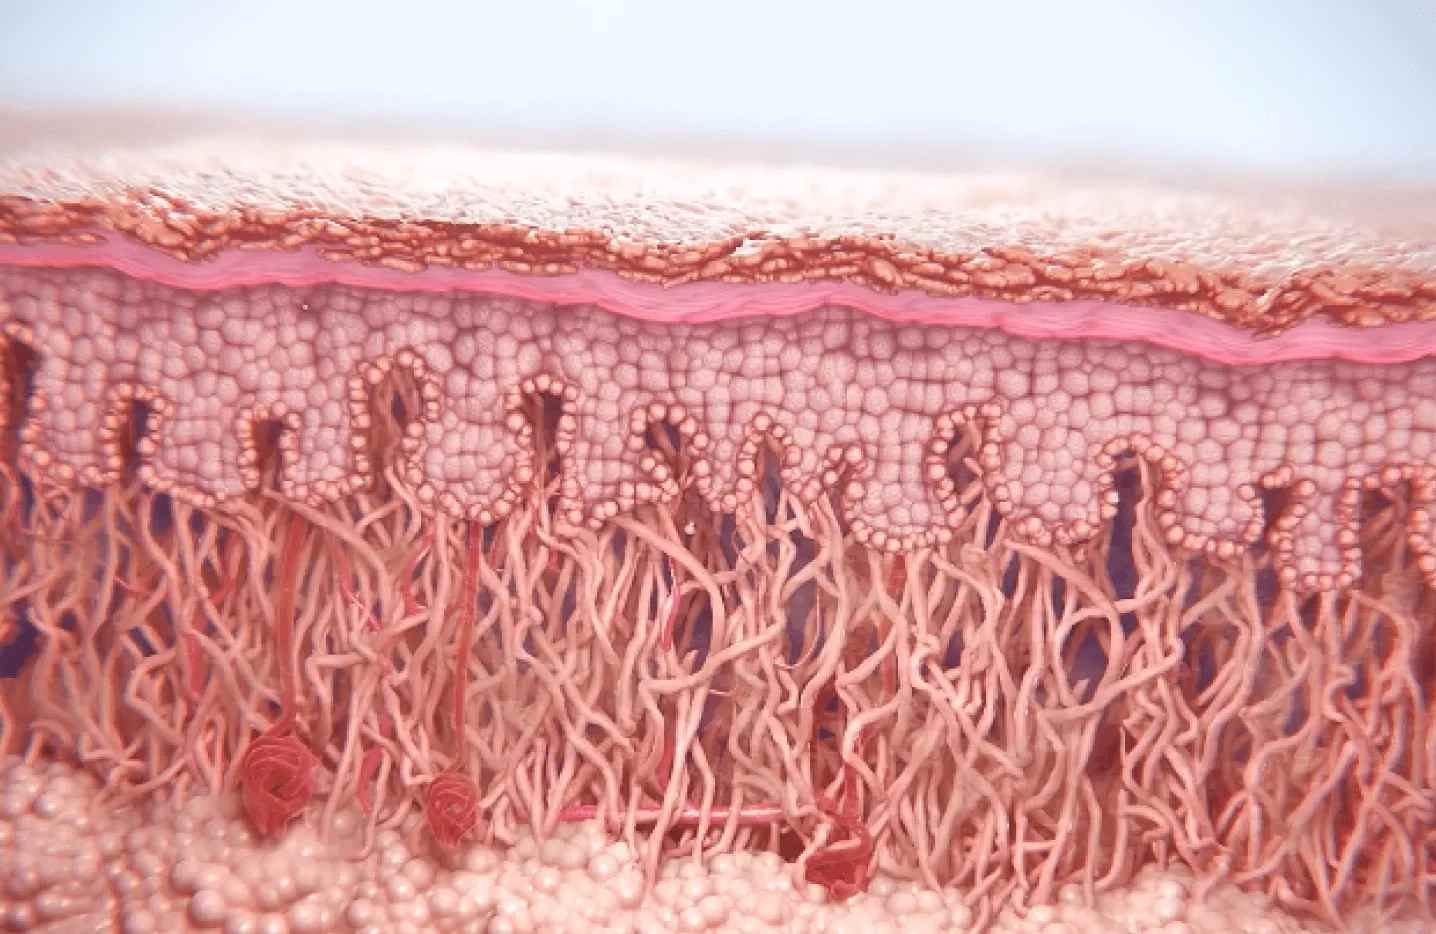 up close dermis layer